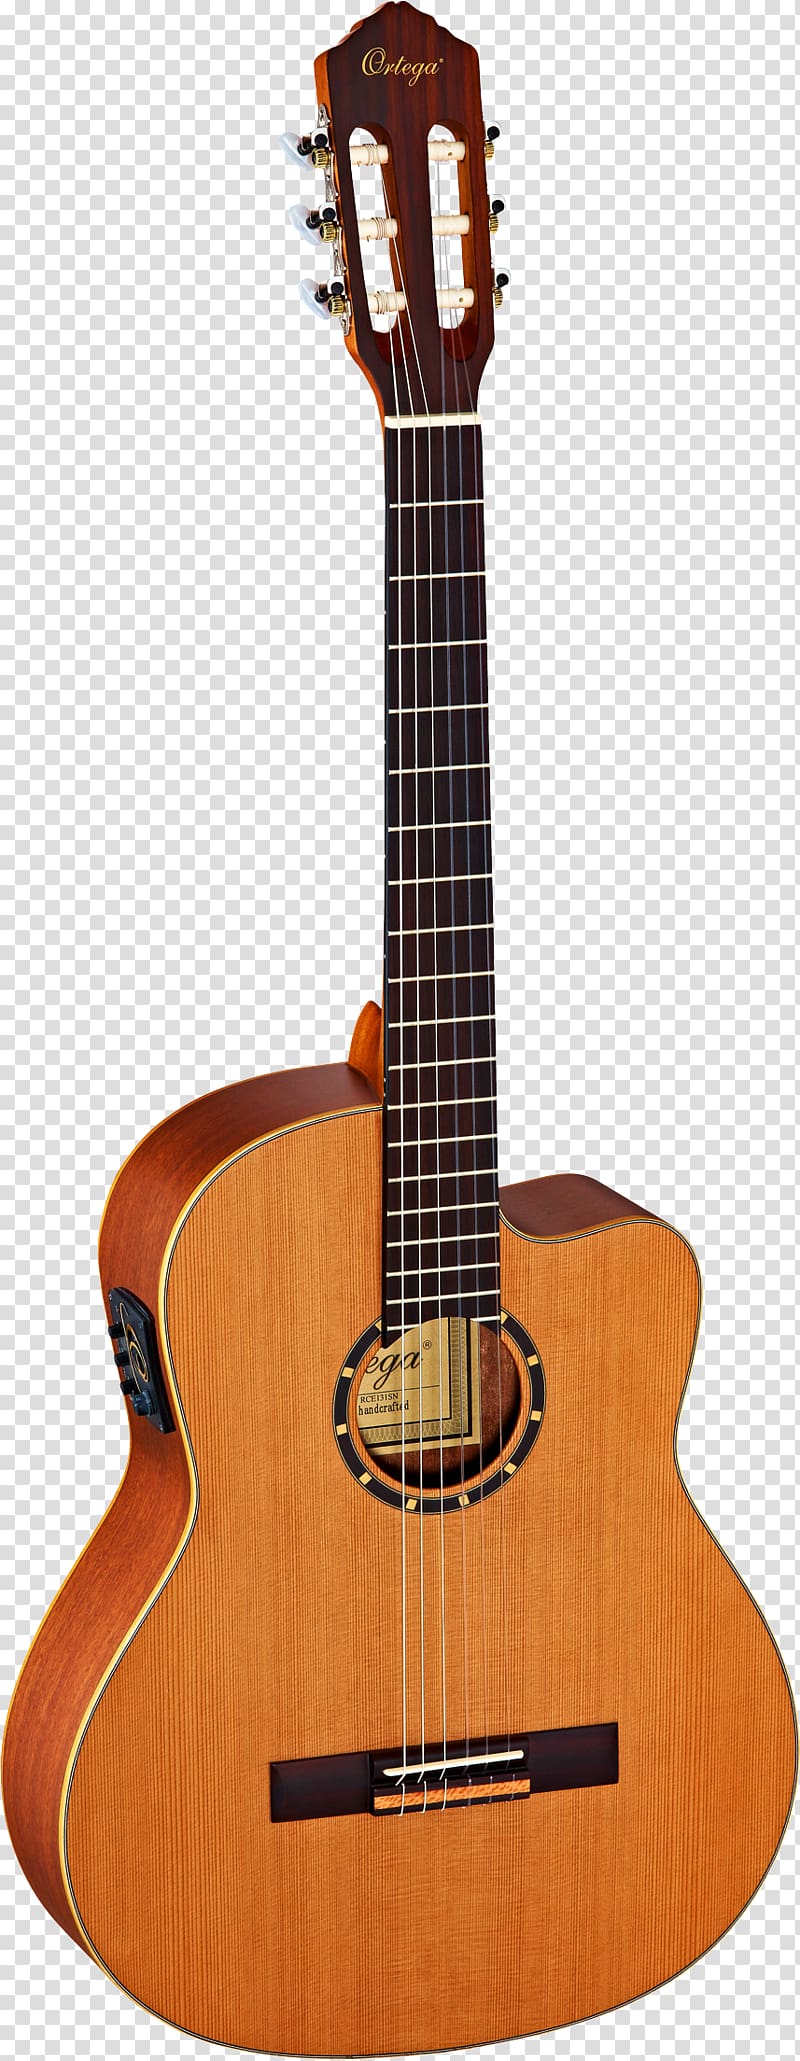 Taylor Guitars Steel-string acoustic guitar Classical guitar Musical Instruments, amancio ortega transparent background PNG clipart